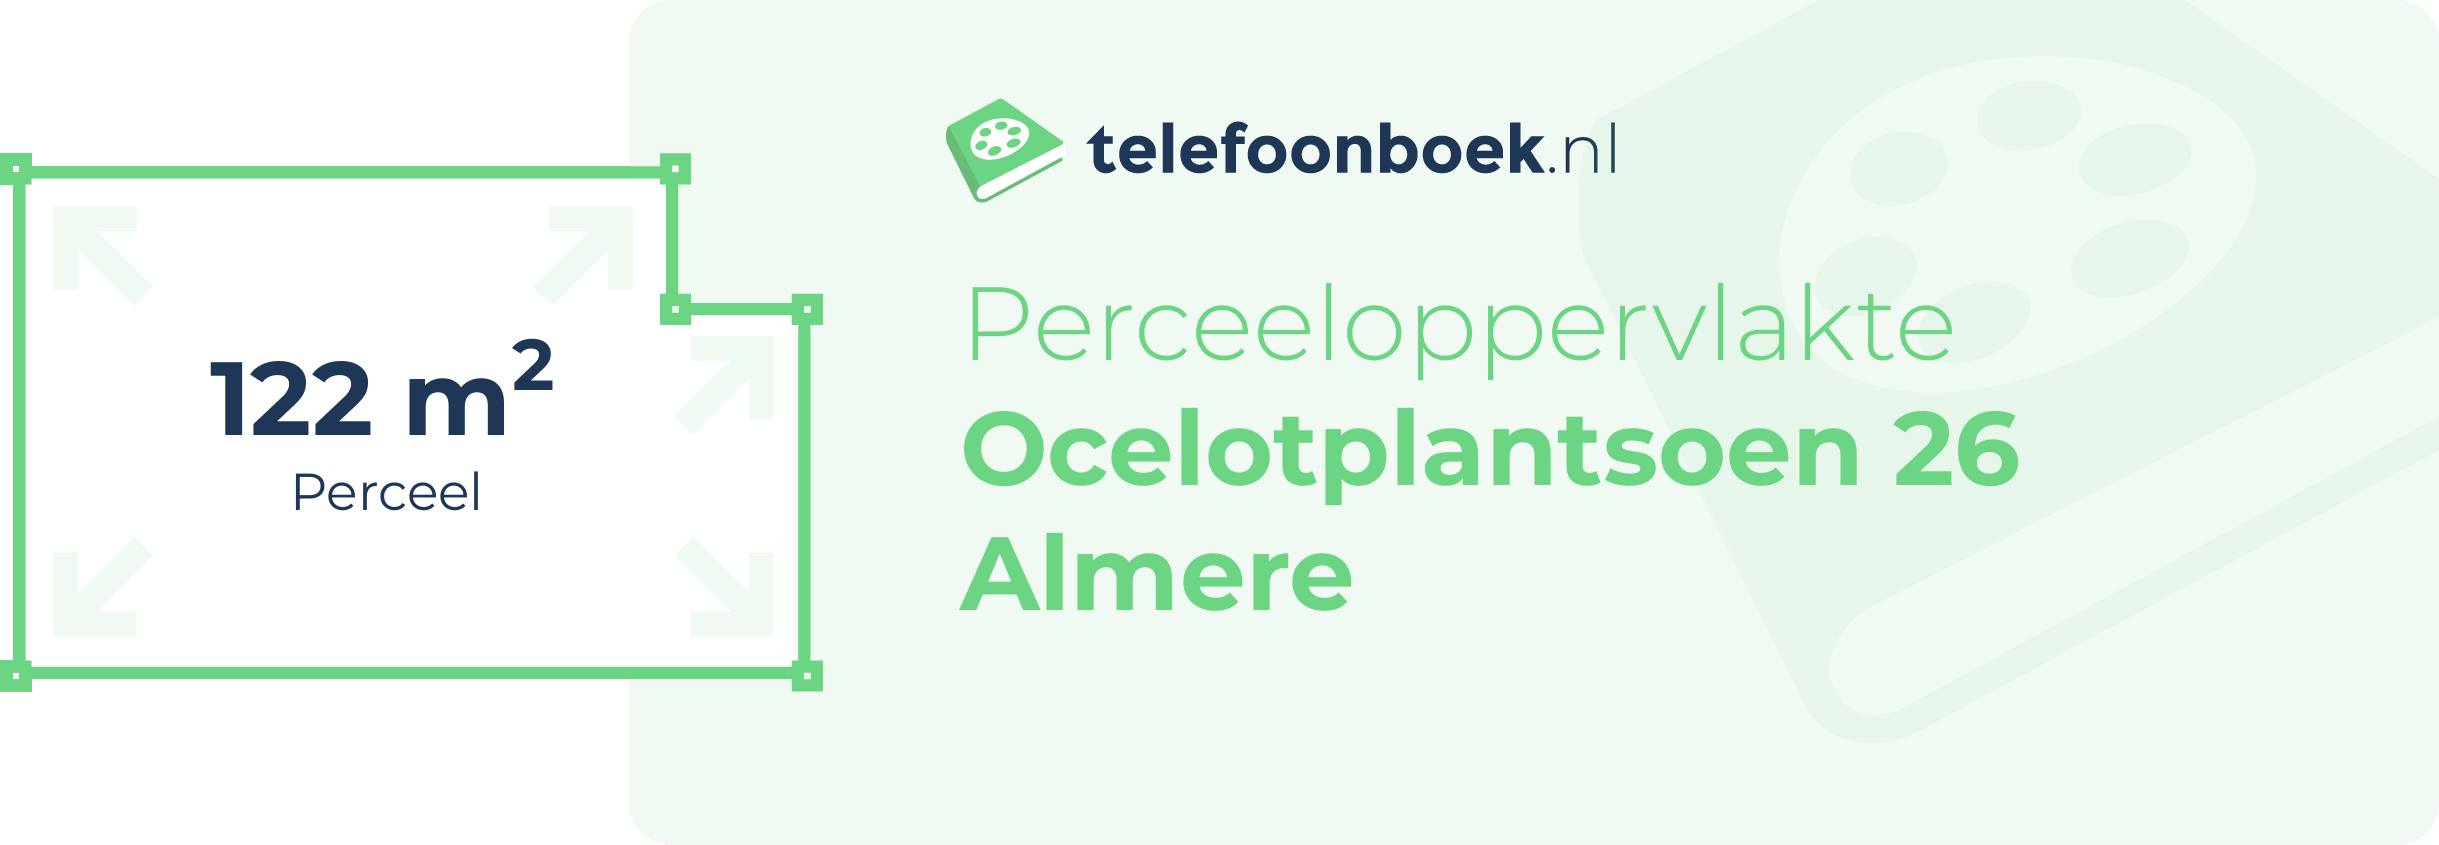 Perceeloppervlakte Ocelotplantsoen 26 Almere